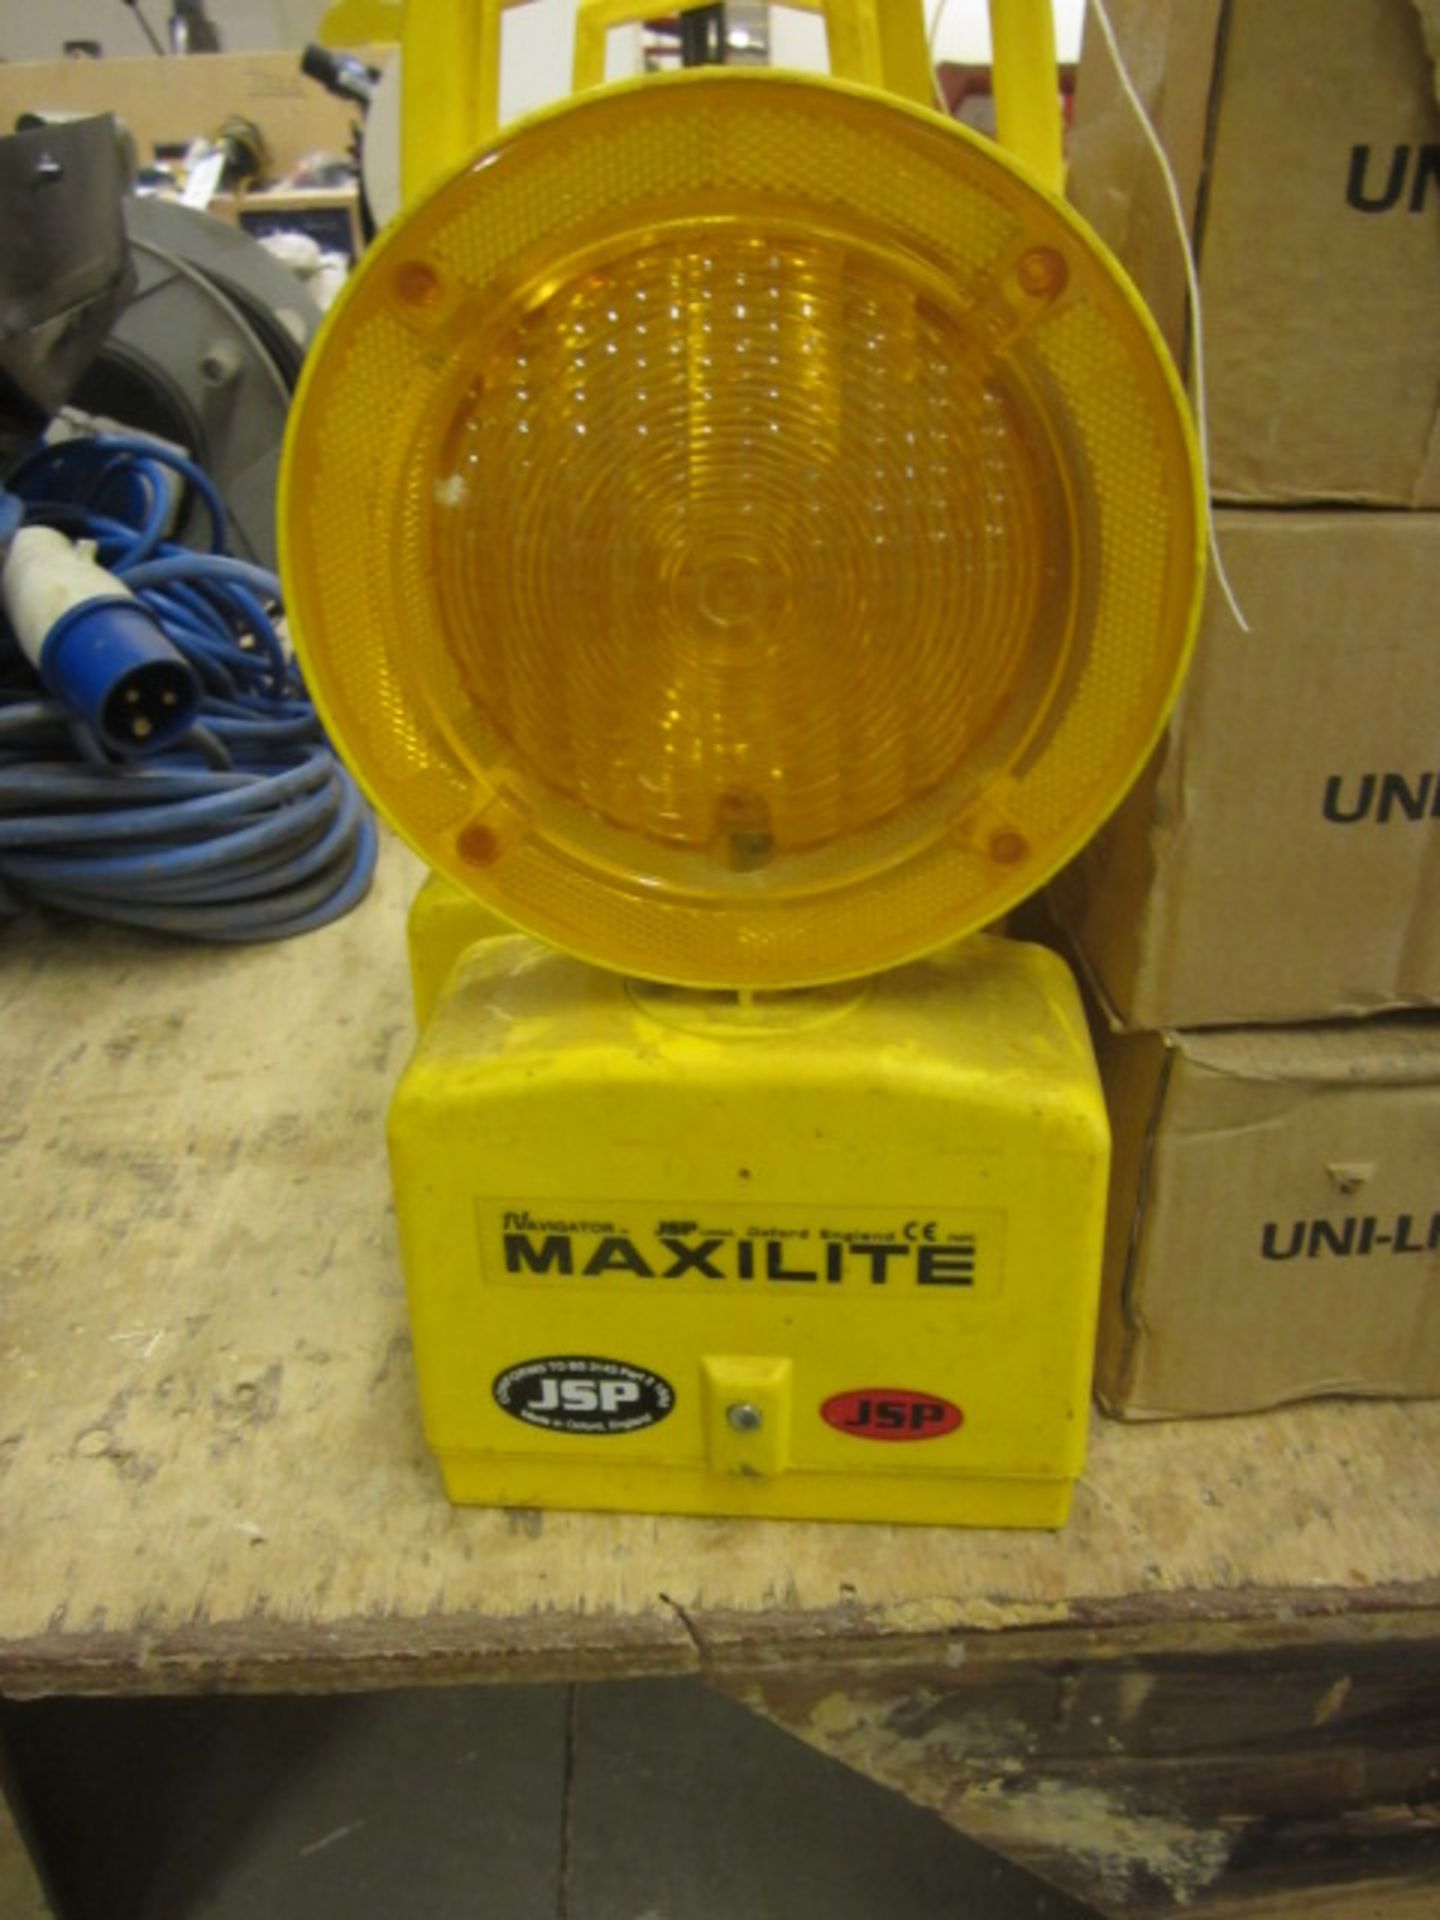 6 x JSP Maxilite road warning lights, 3 x boxes Unilite 6v batteries - Image 2 of 2